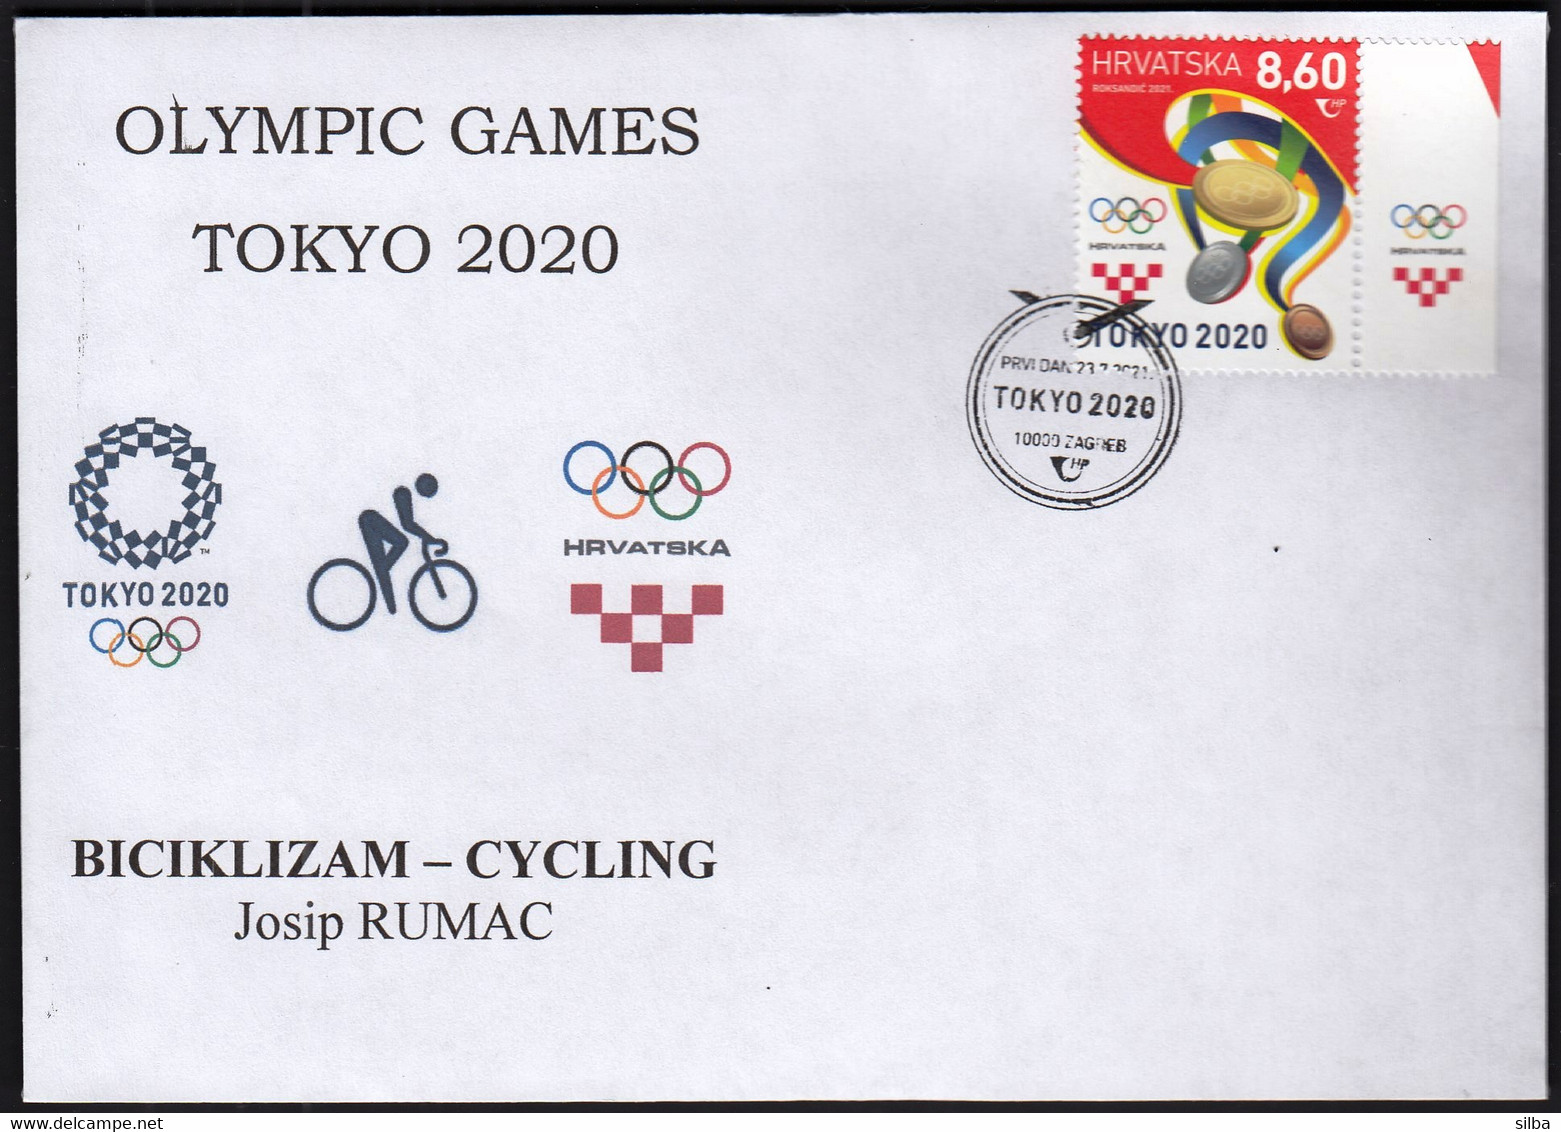 Croatia 2021 / Olympic Games Tokyo 2020 / Cycling / Croatian Athletes / Medals - Summer 2020: Tokyo